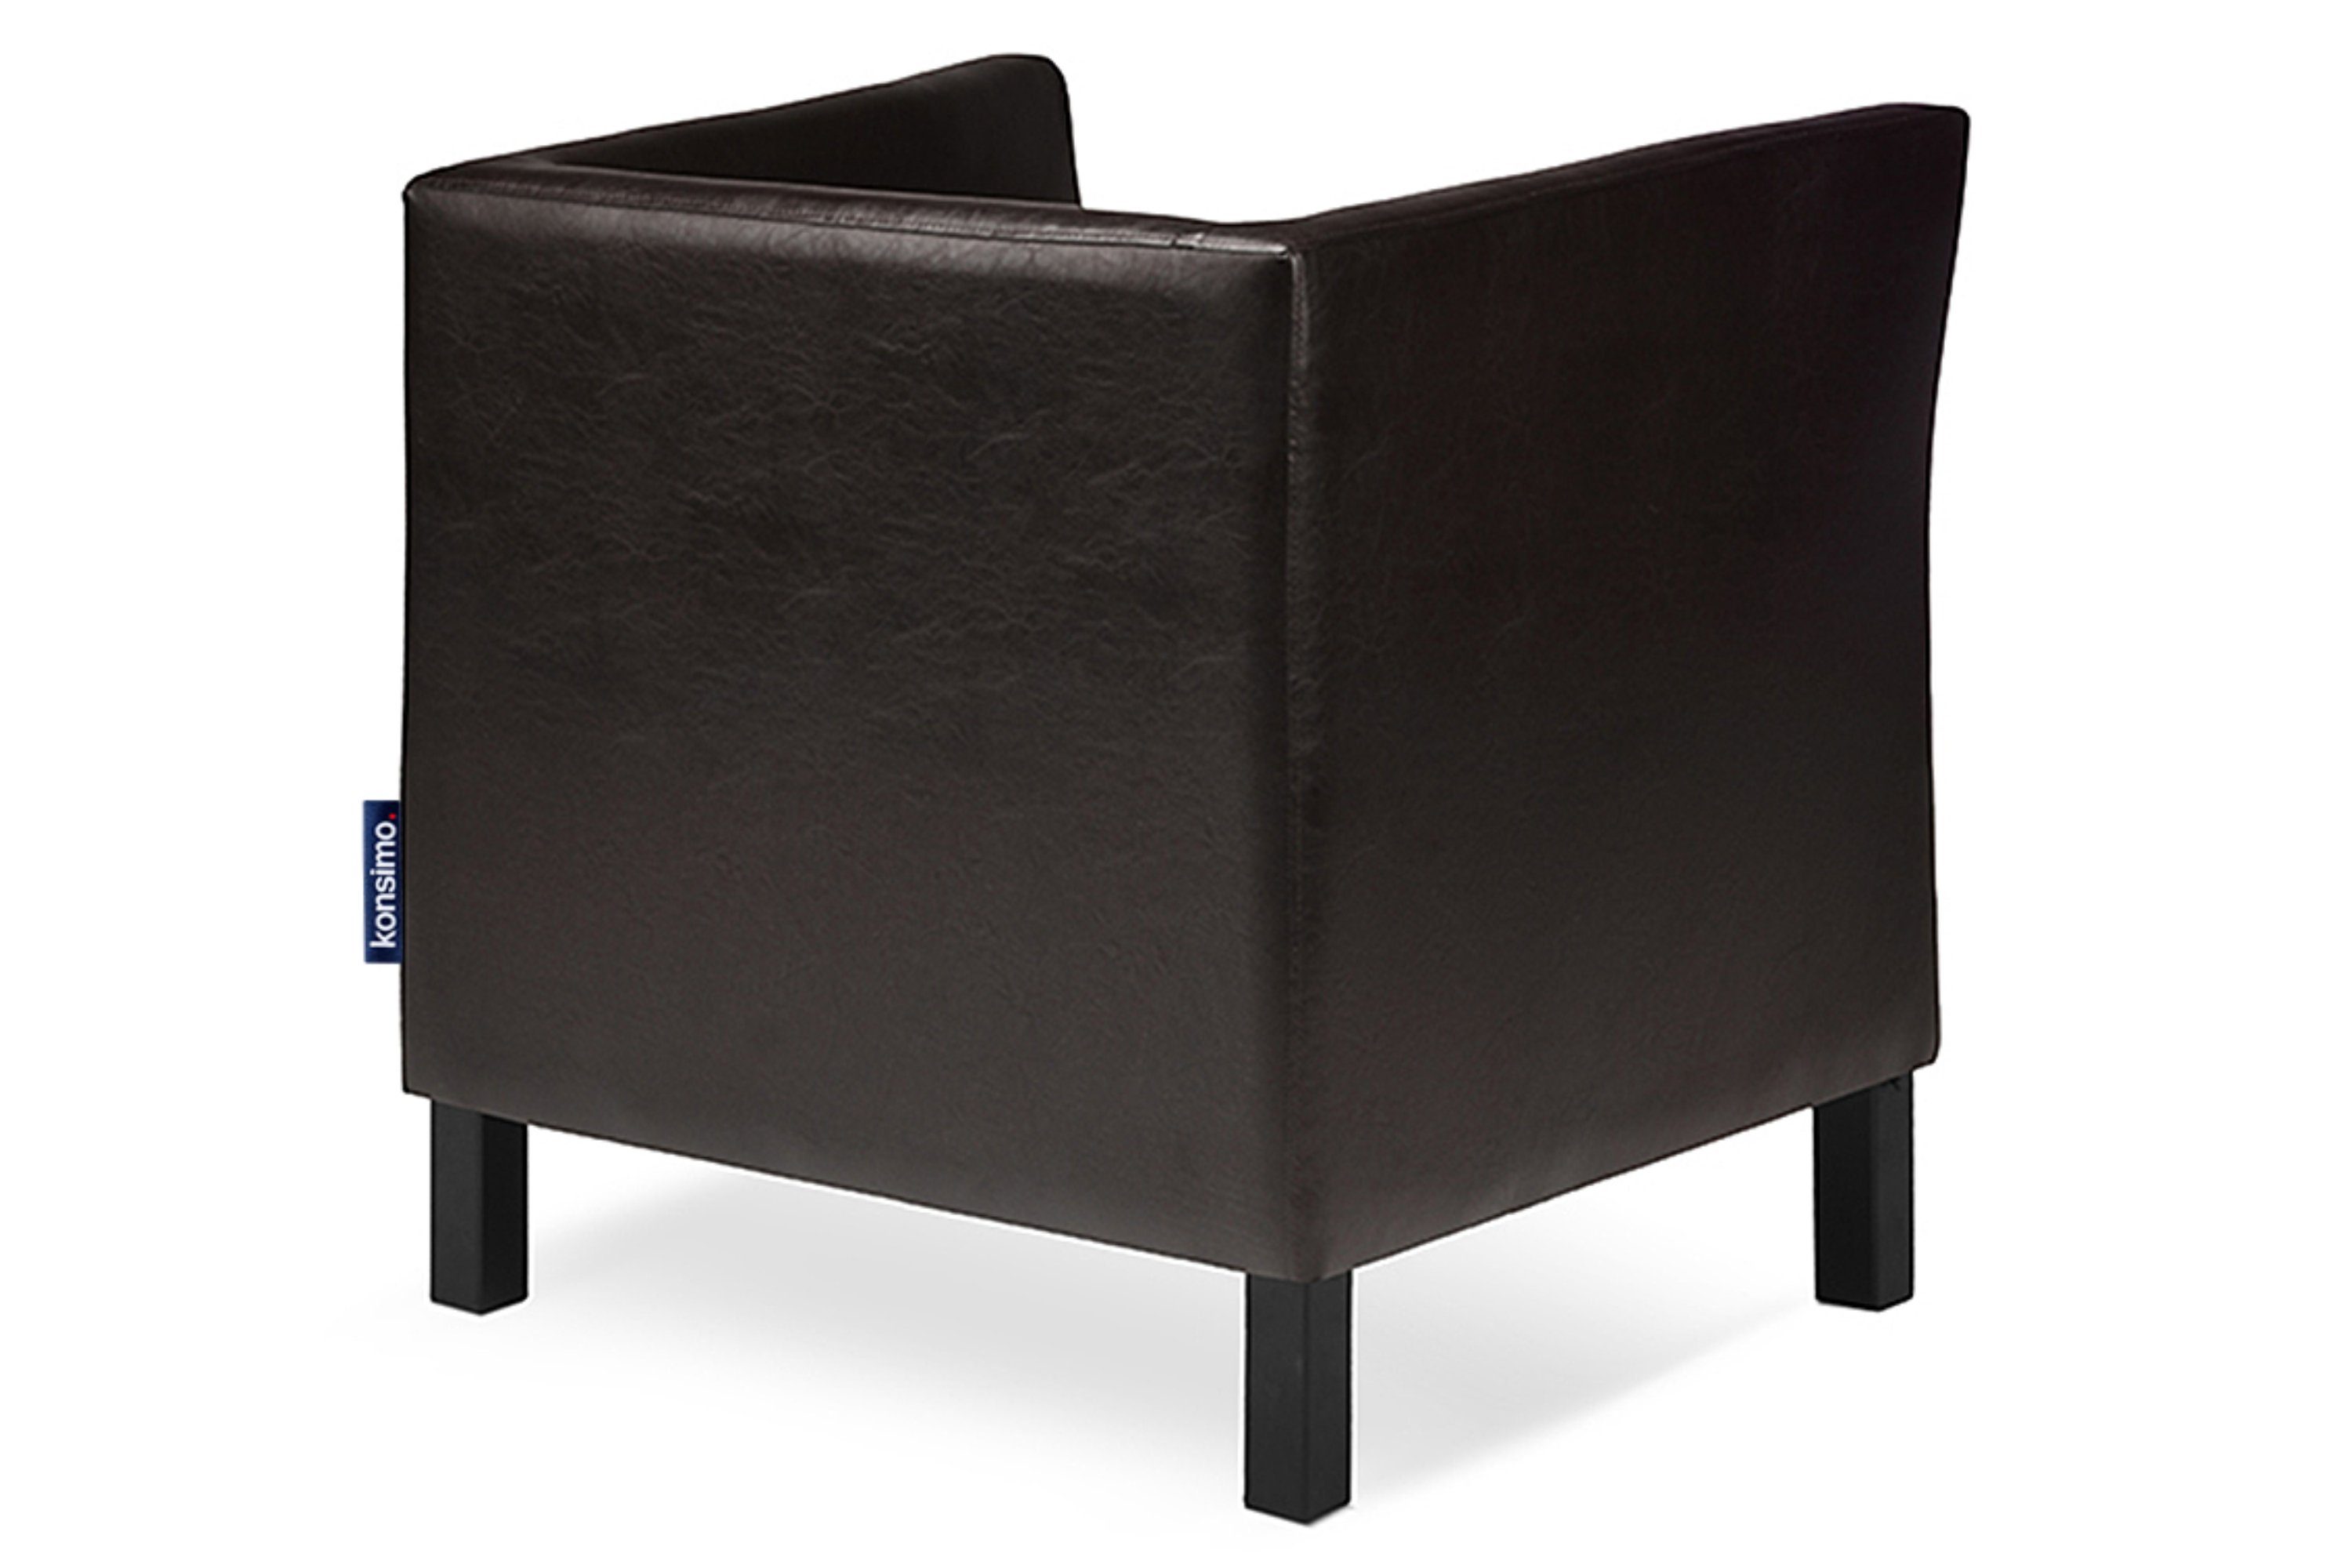 und Konsimo | dunkelbraun Sessel, Rückenlehne, ESPECTO Sessel | Kunstleder hohe dunkelbraun weiche hohe Massivholzbeine, Sitzfläche Dunkelbraun